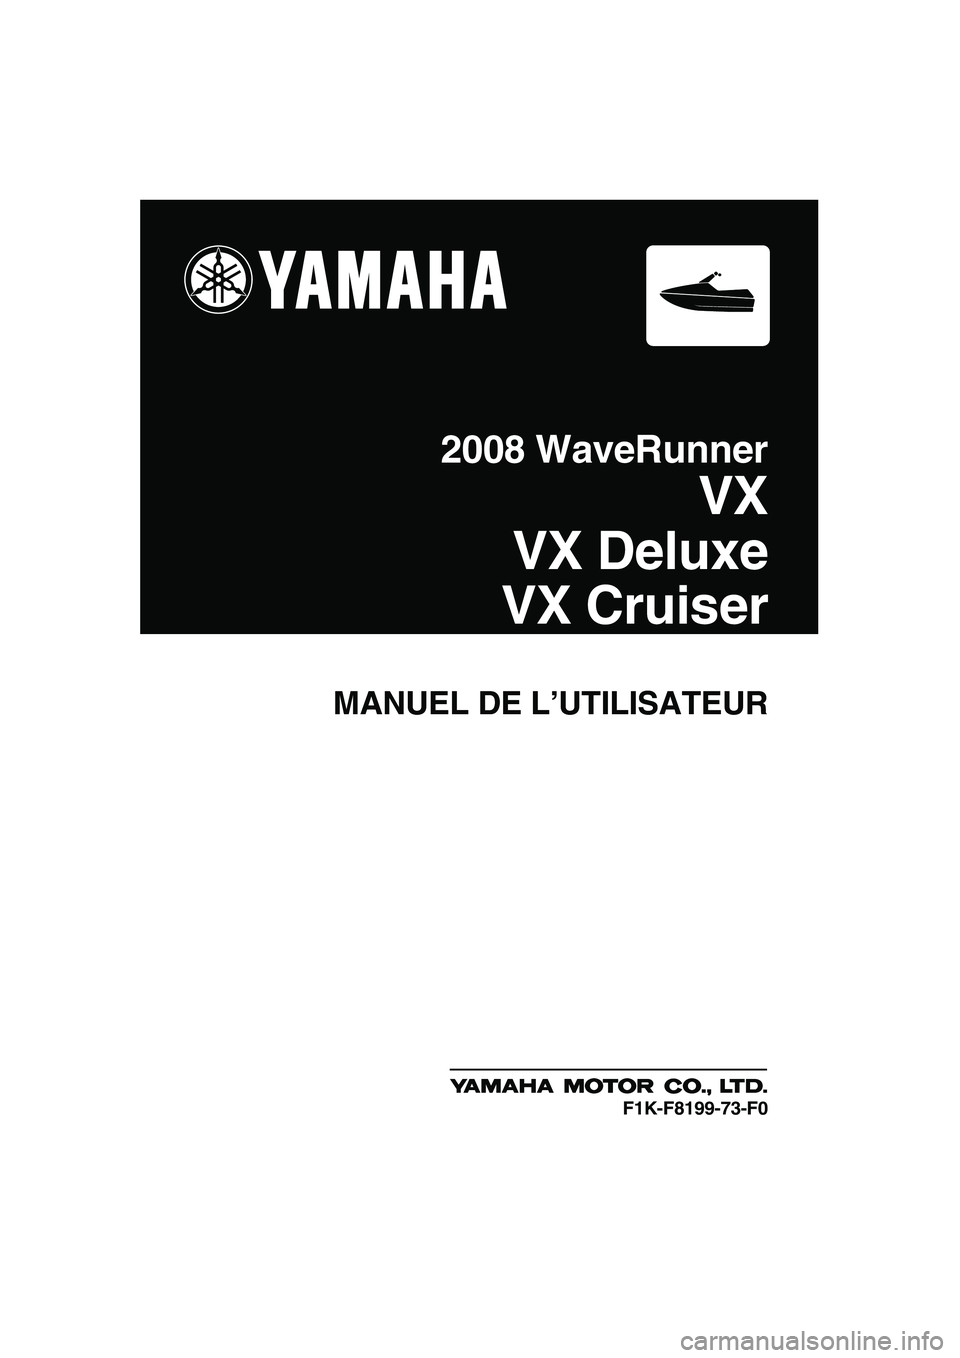 YAMAHA VX SPORT 2008  Notices Demploi (in French) MANUEL DE L’UTILISATEUR
2008 WaveRunner
VX
VX Deluxe
VX Cruiser
F1K-F8199-73-F0
UF1K73F0.book  Page 1  Wednesday, July 11, 2007  4:05 PM 